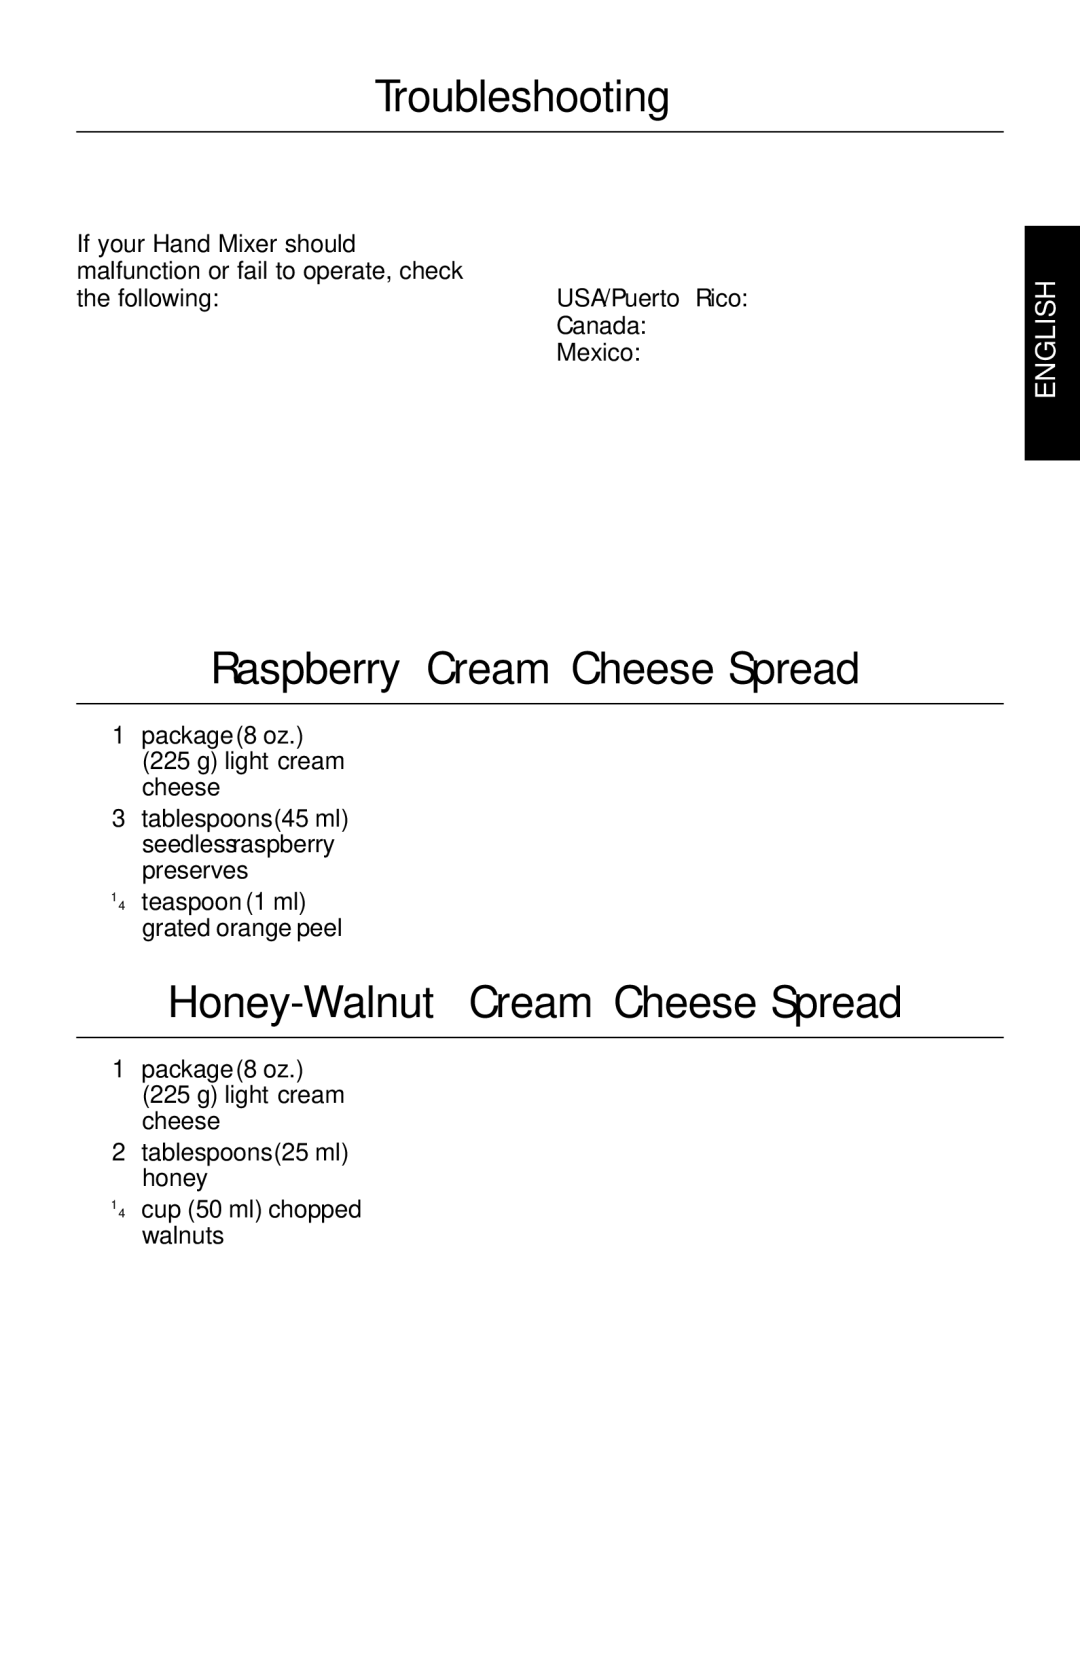 KitchenAid KHM7T, KHM9 Troubleshooting, Raspberry Cream Cheese Spread, Honey-Walnut Cream Cheese Spread, USA/Puerto Rico 